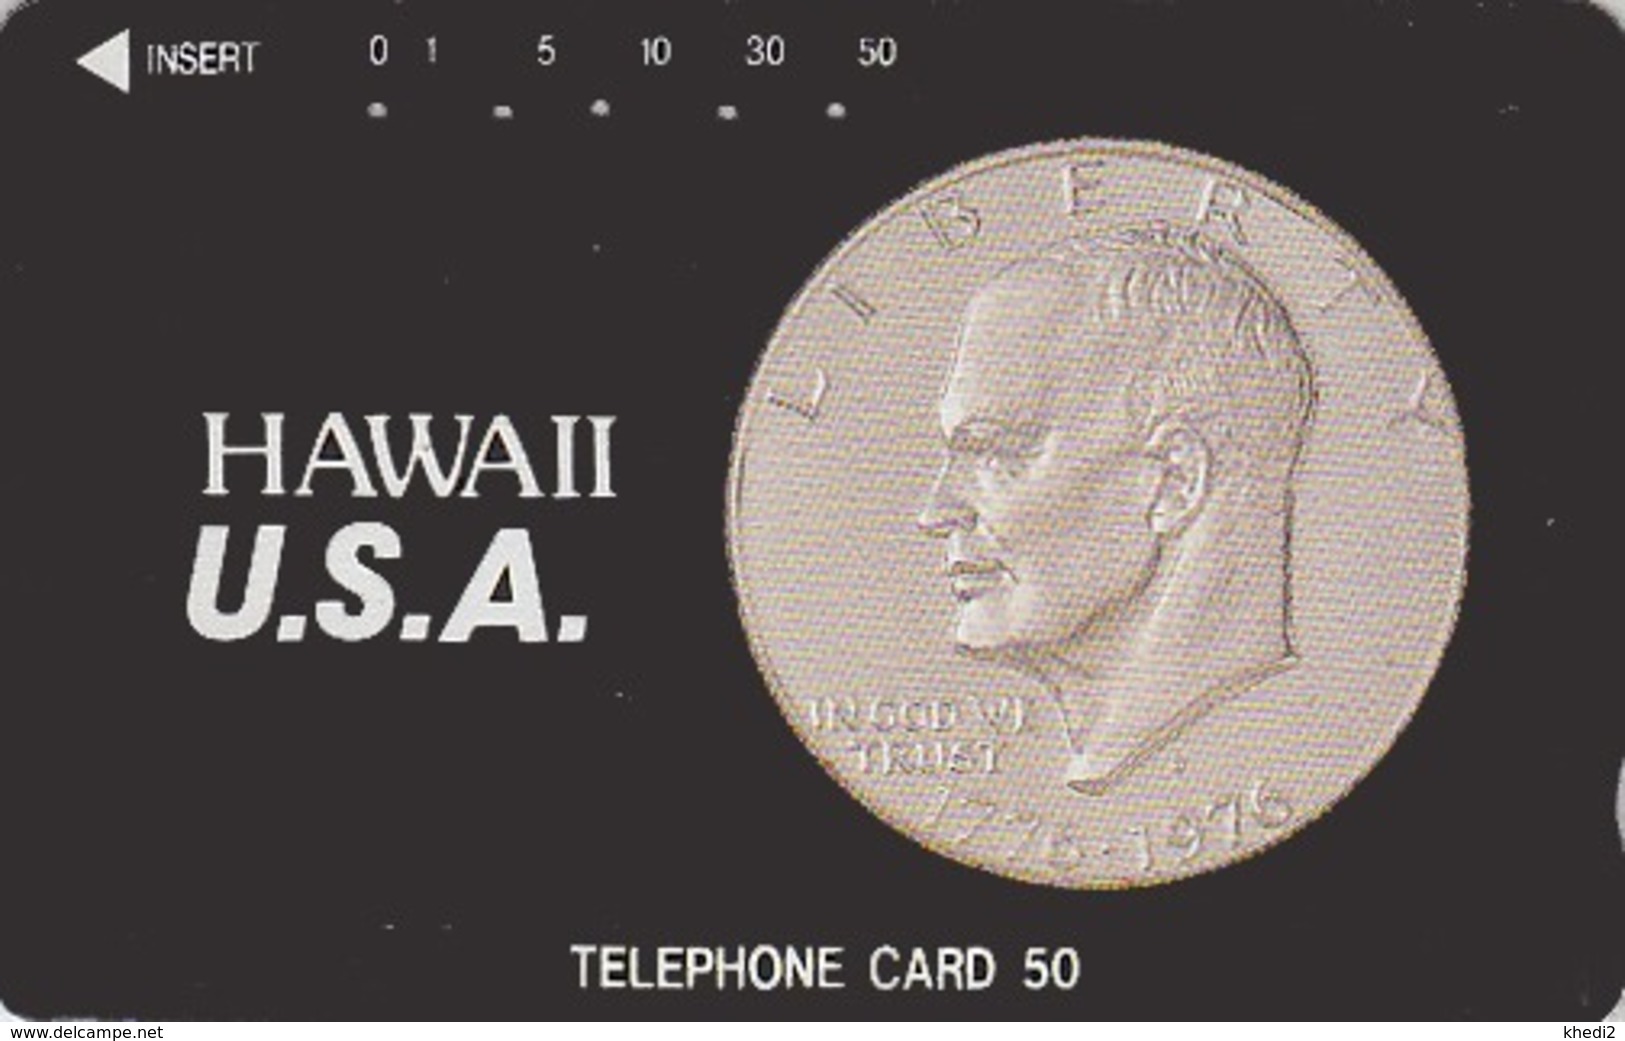 Télécarte Japon / 110-51050 - Pièce De Monnaie HAWAII - COIN Japan Phonecard / USA Related - MÜNZE - 516 - Timbres & Monnaies